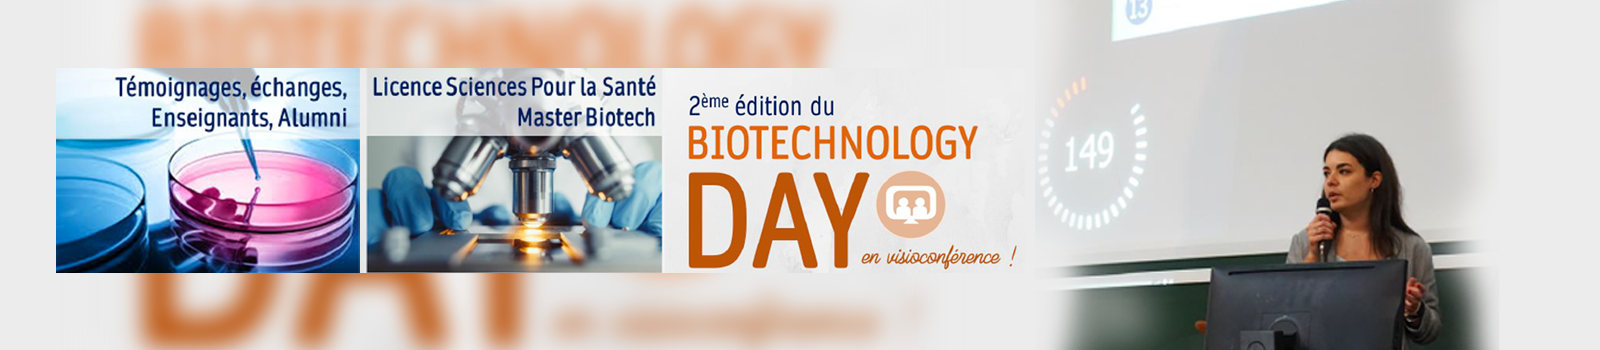 Biotechnology Day 2020